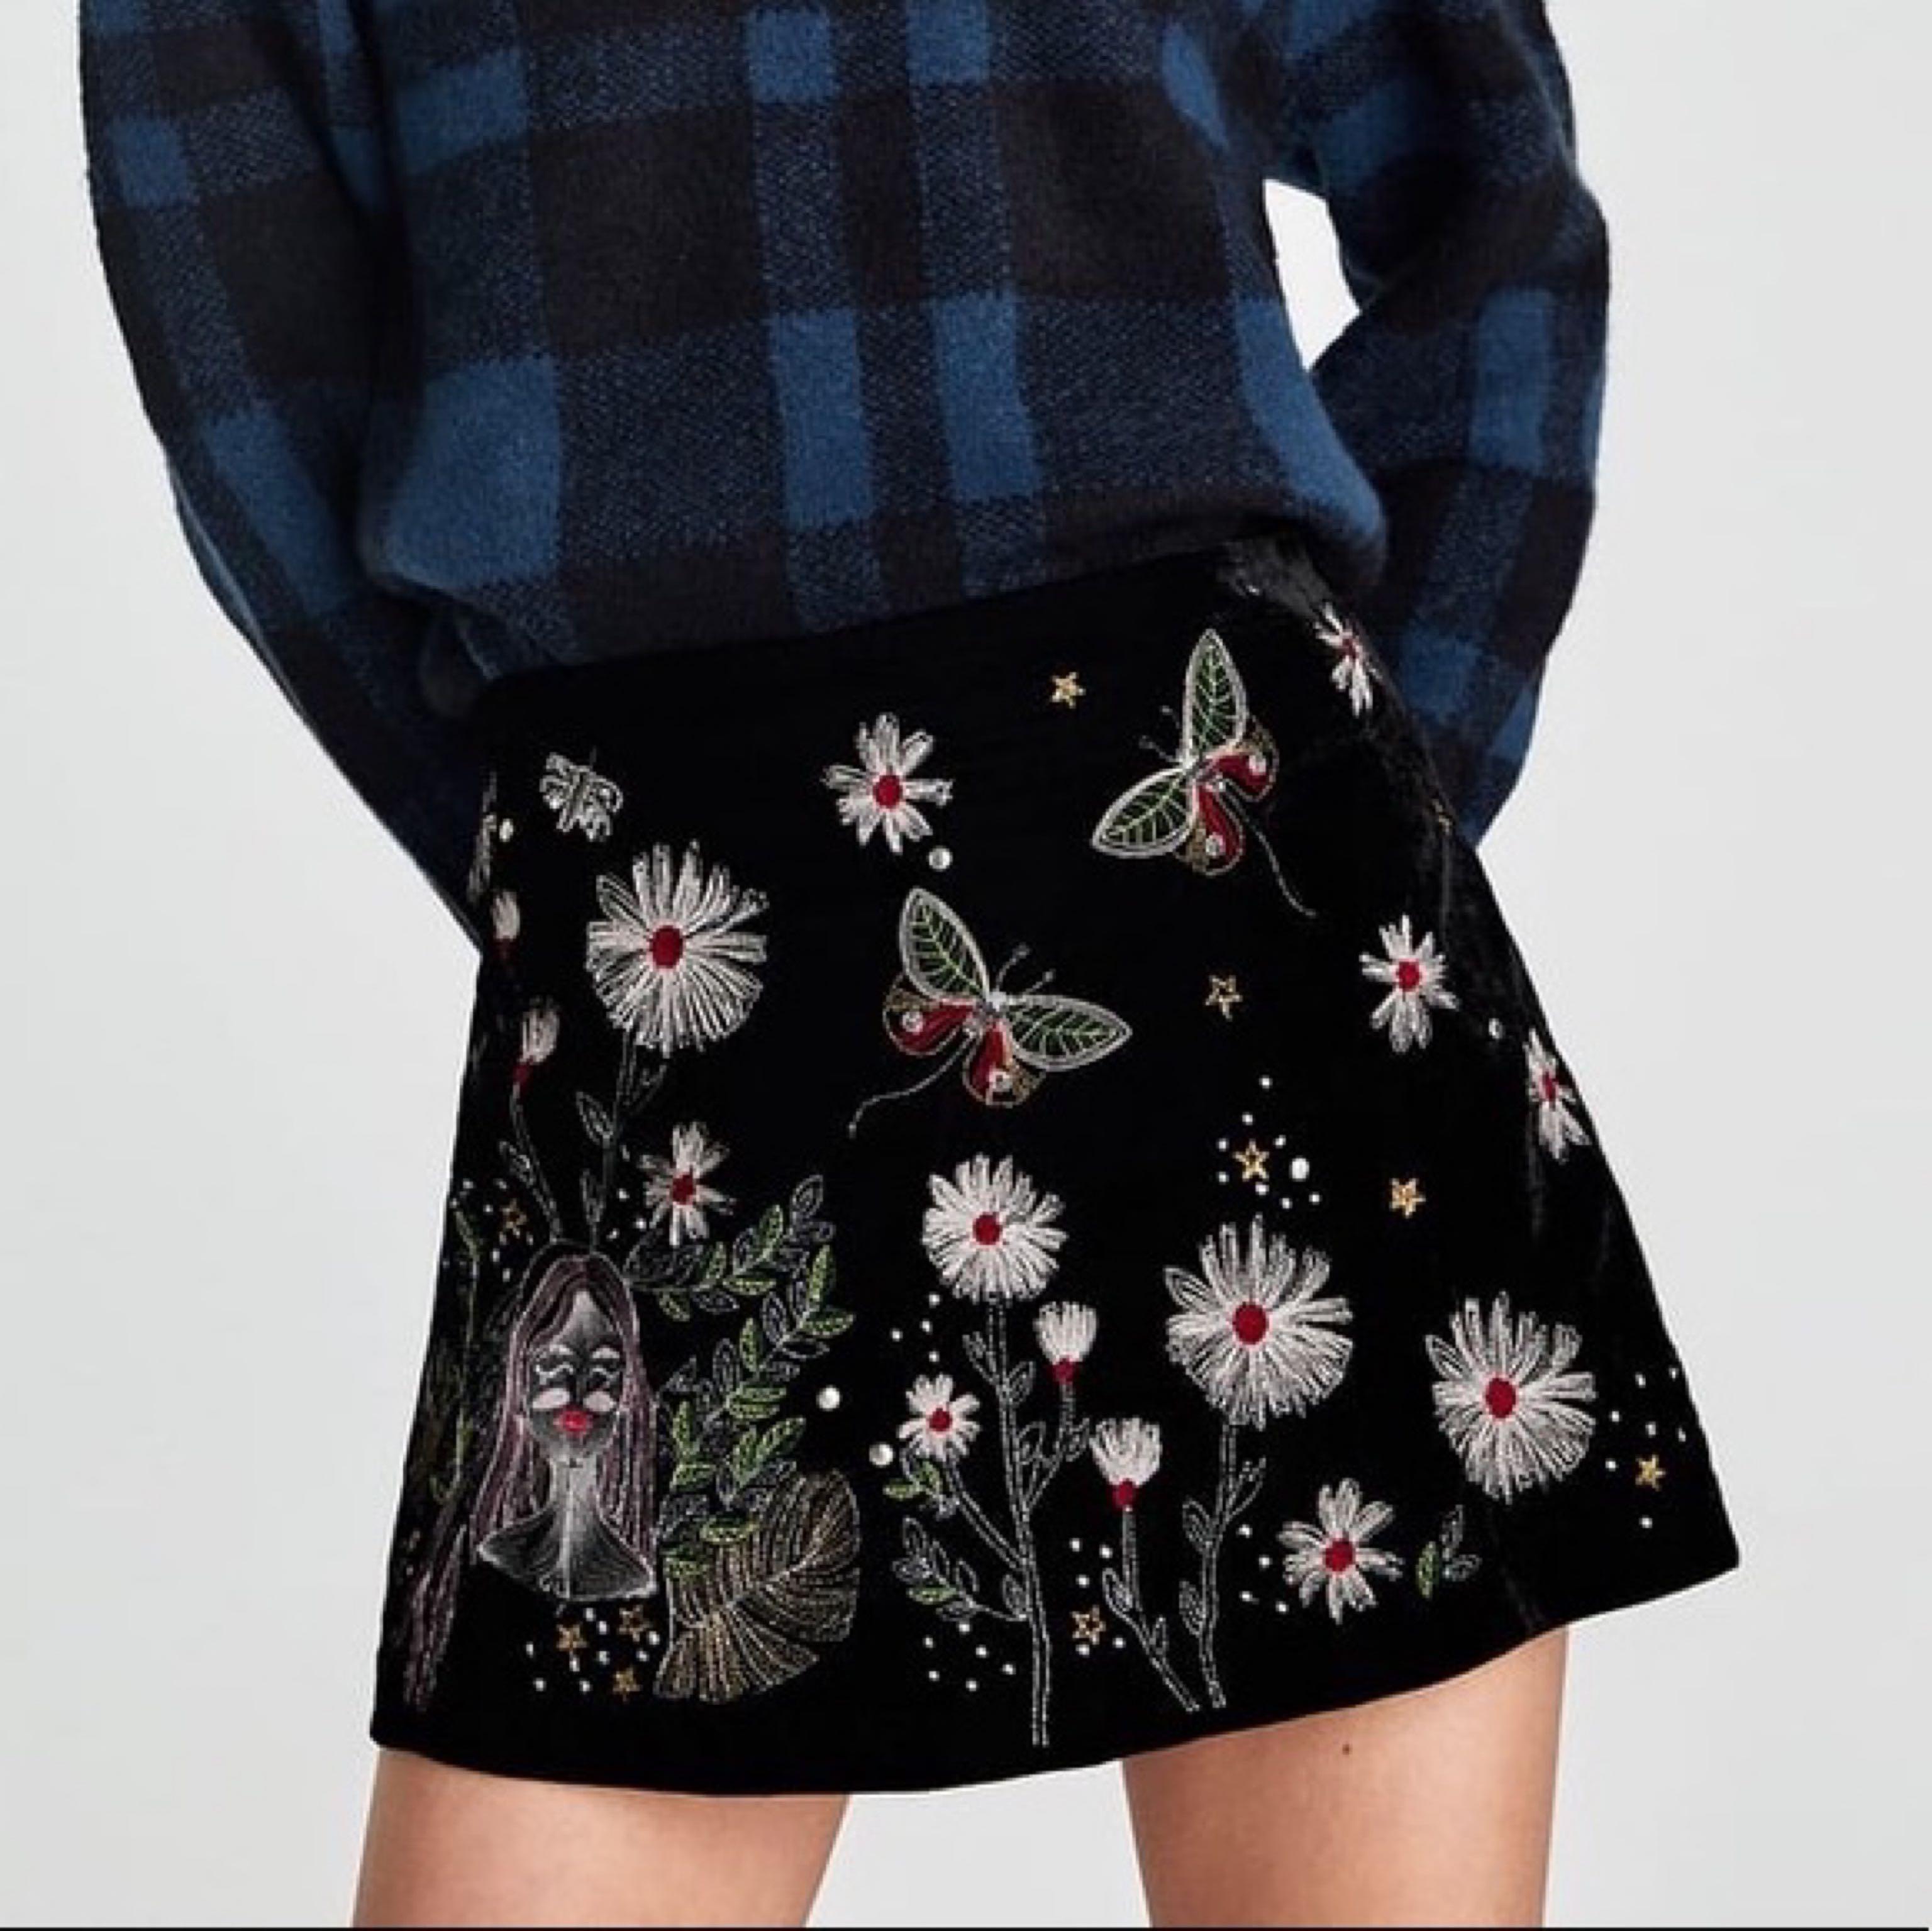 zara embroidered mini skirt